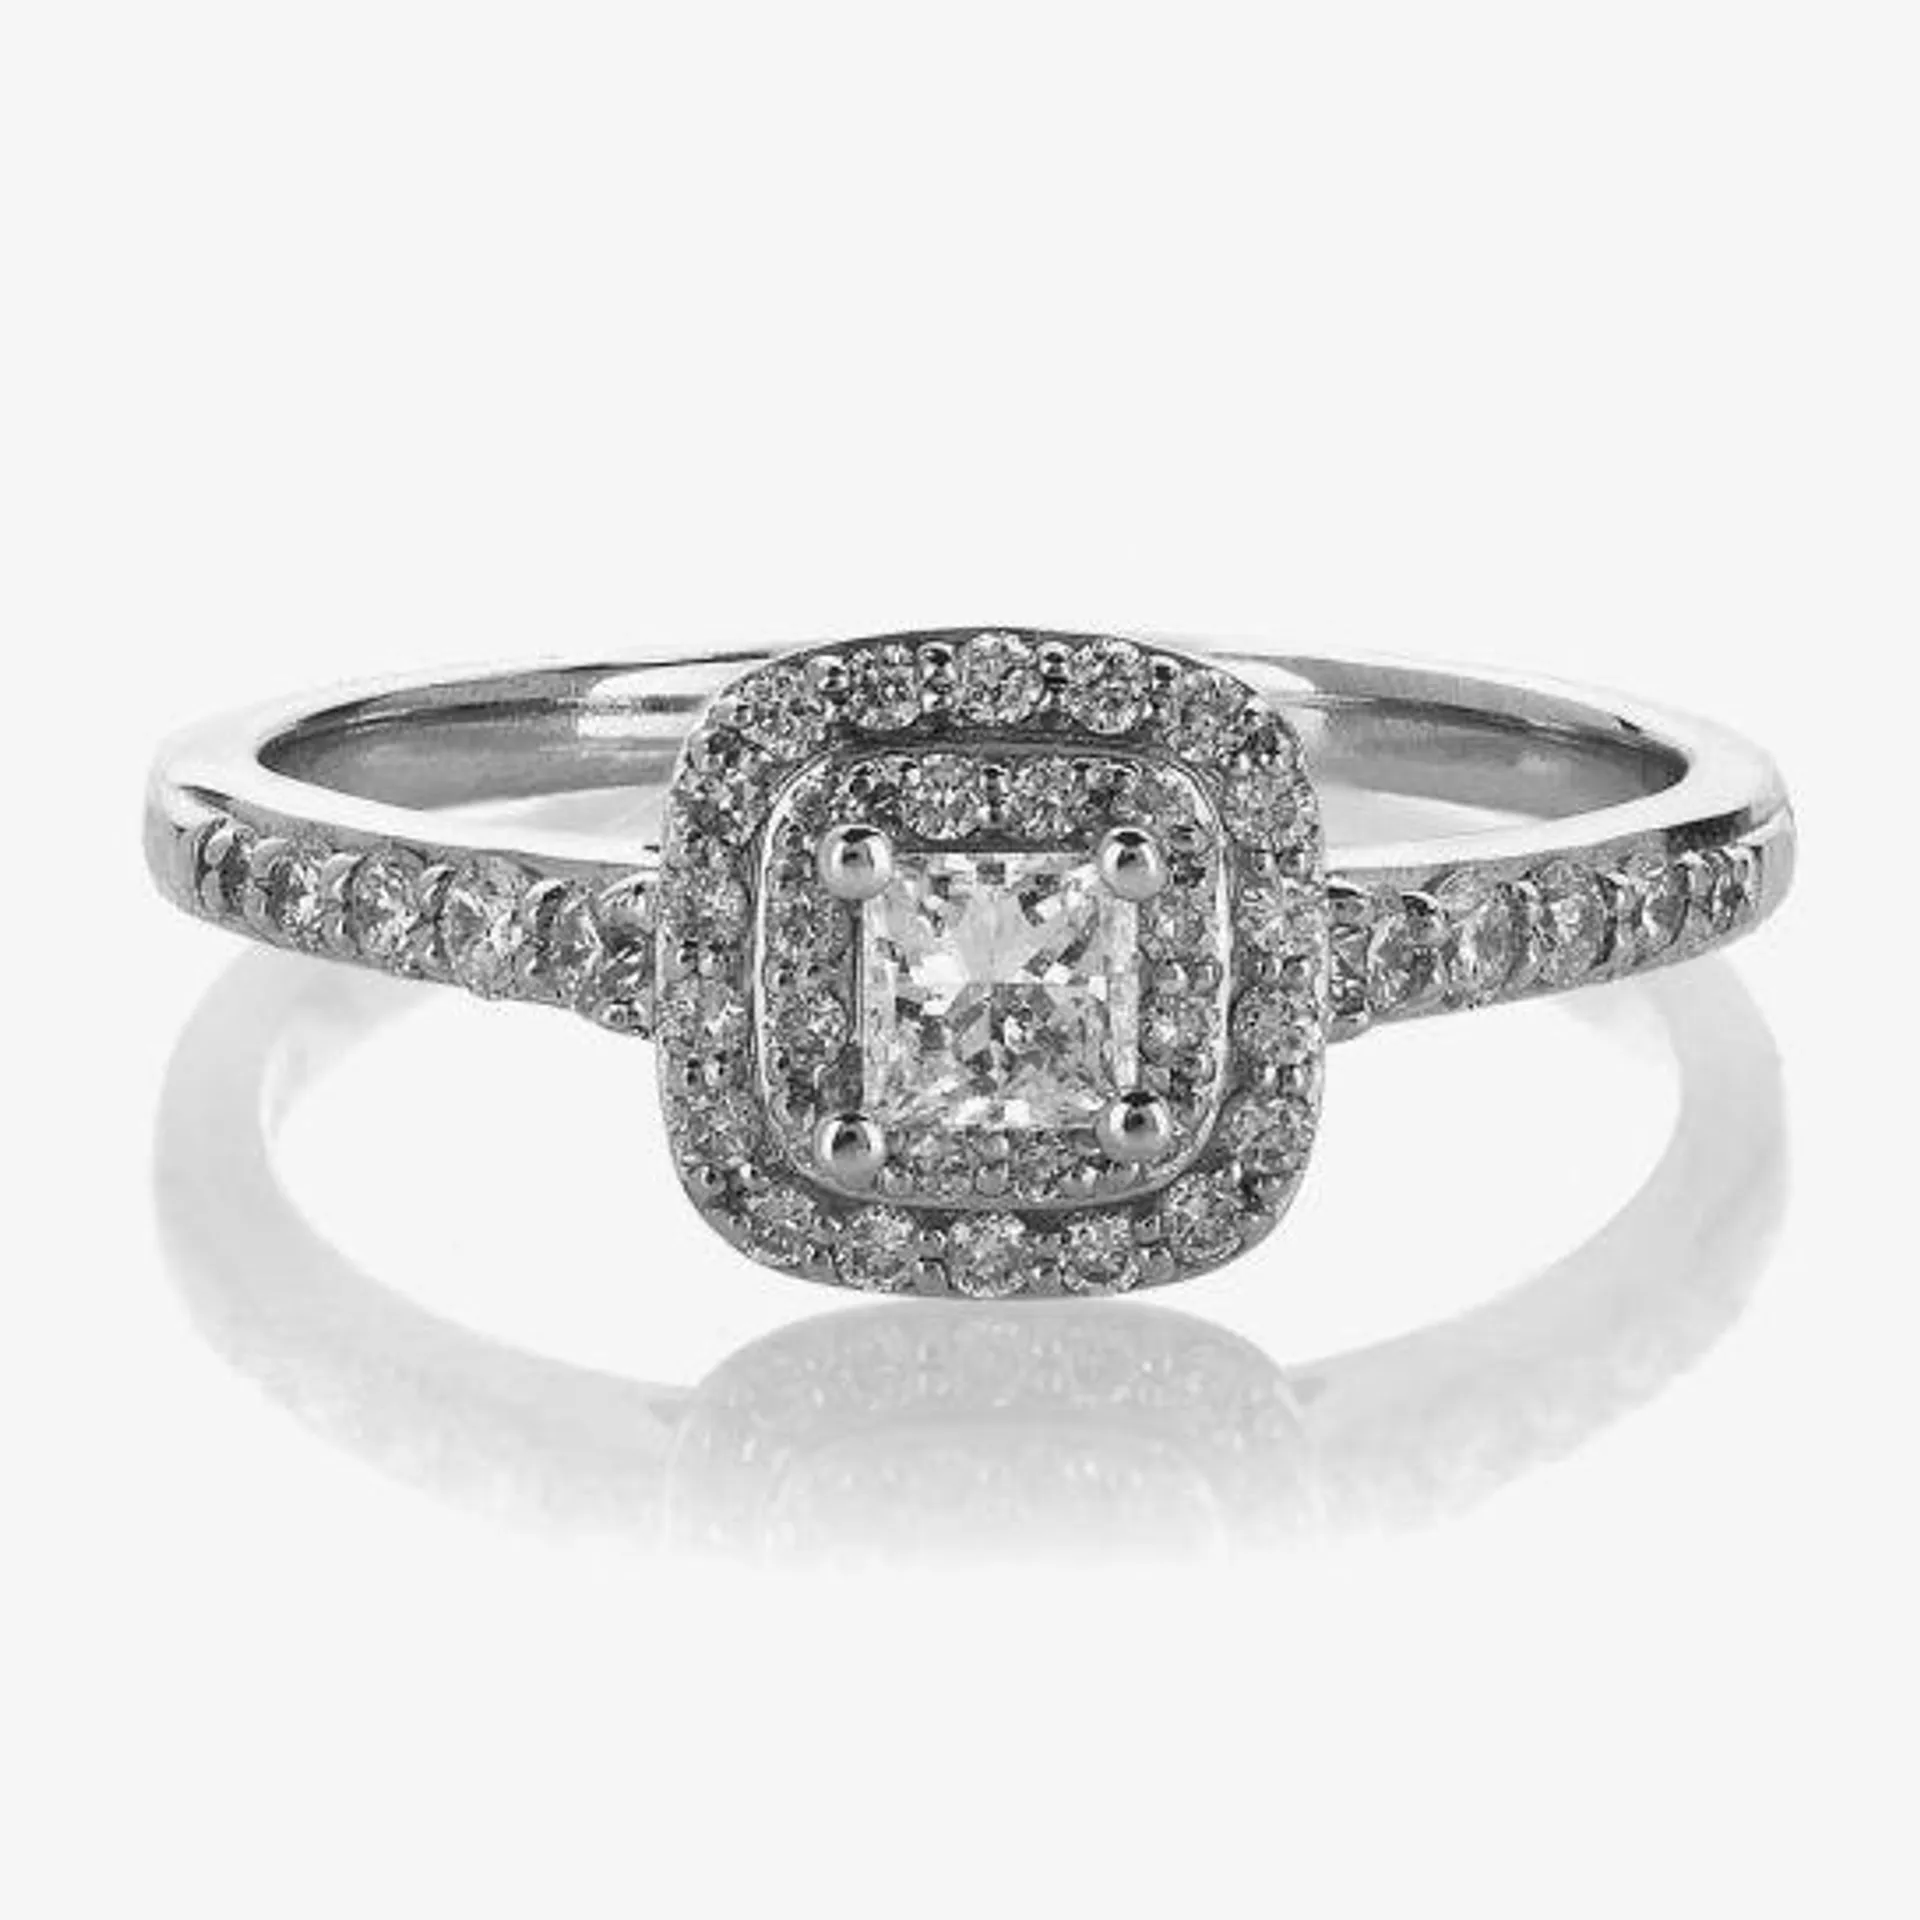 9ct White Gold 0.50ct Princess-cut Diamond Double Halo Ring 3812WG/50-9